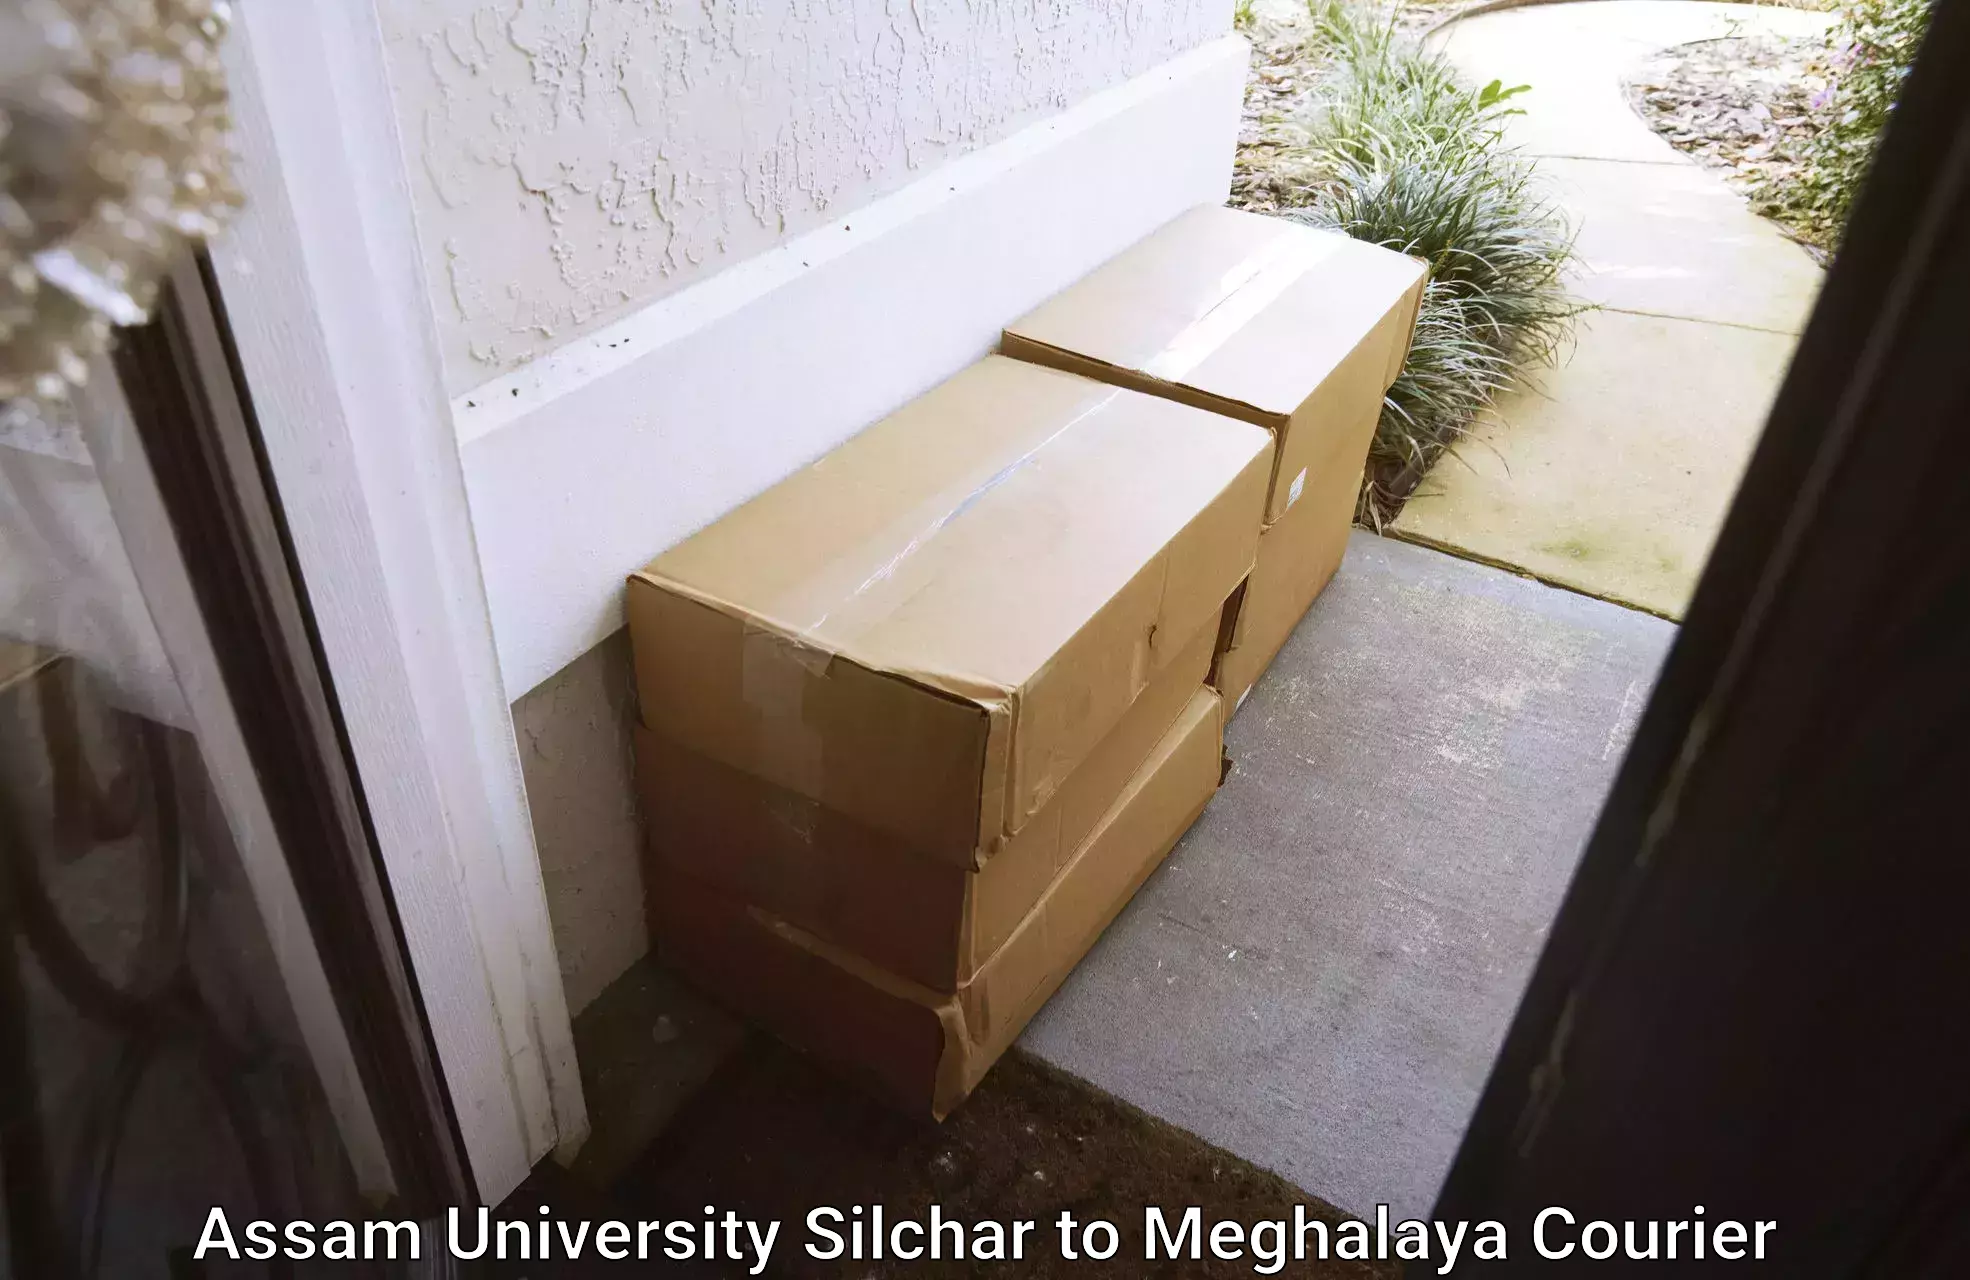 Specialized shipment handling Assam University Silchar to Shillong